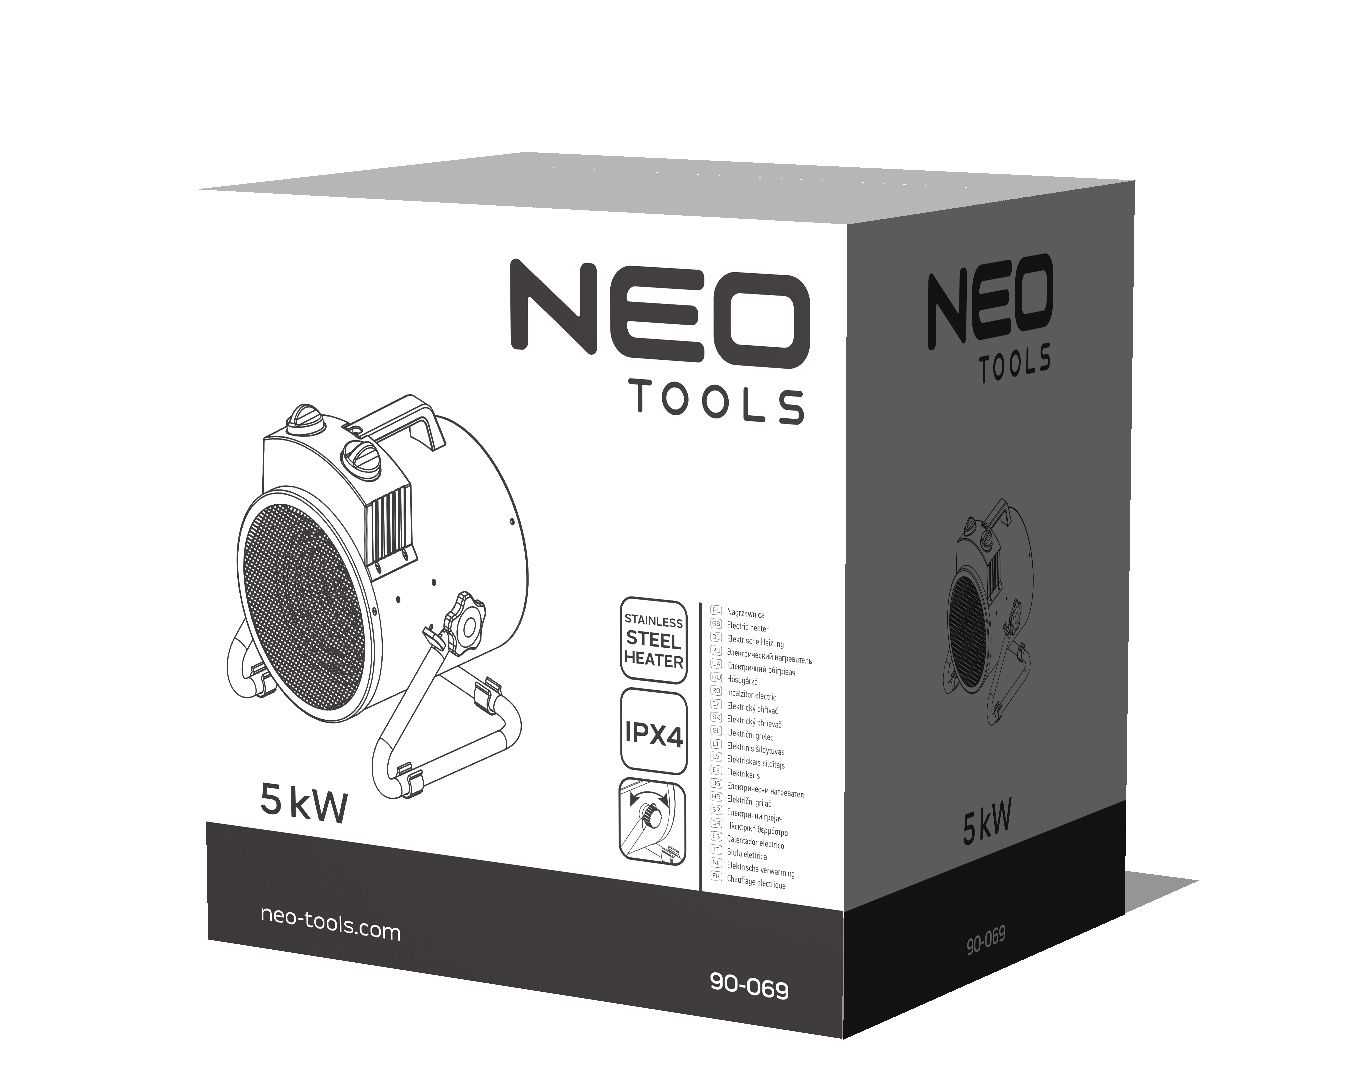 Теплова гармата Neo Tools 90-069 характеристики - фотографія 7